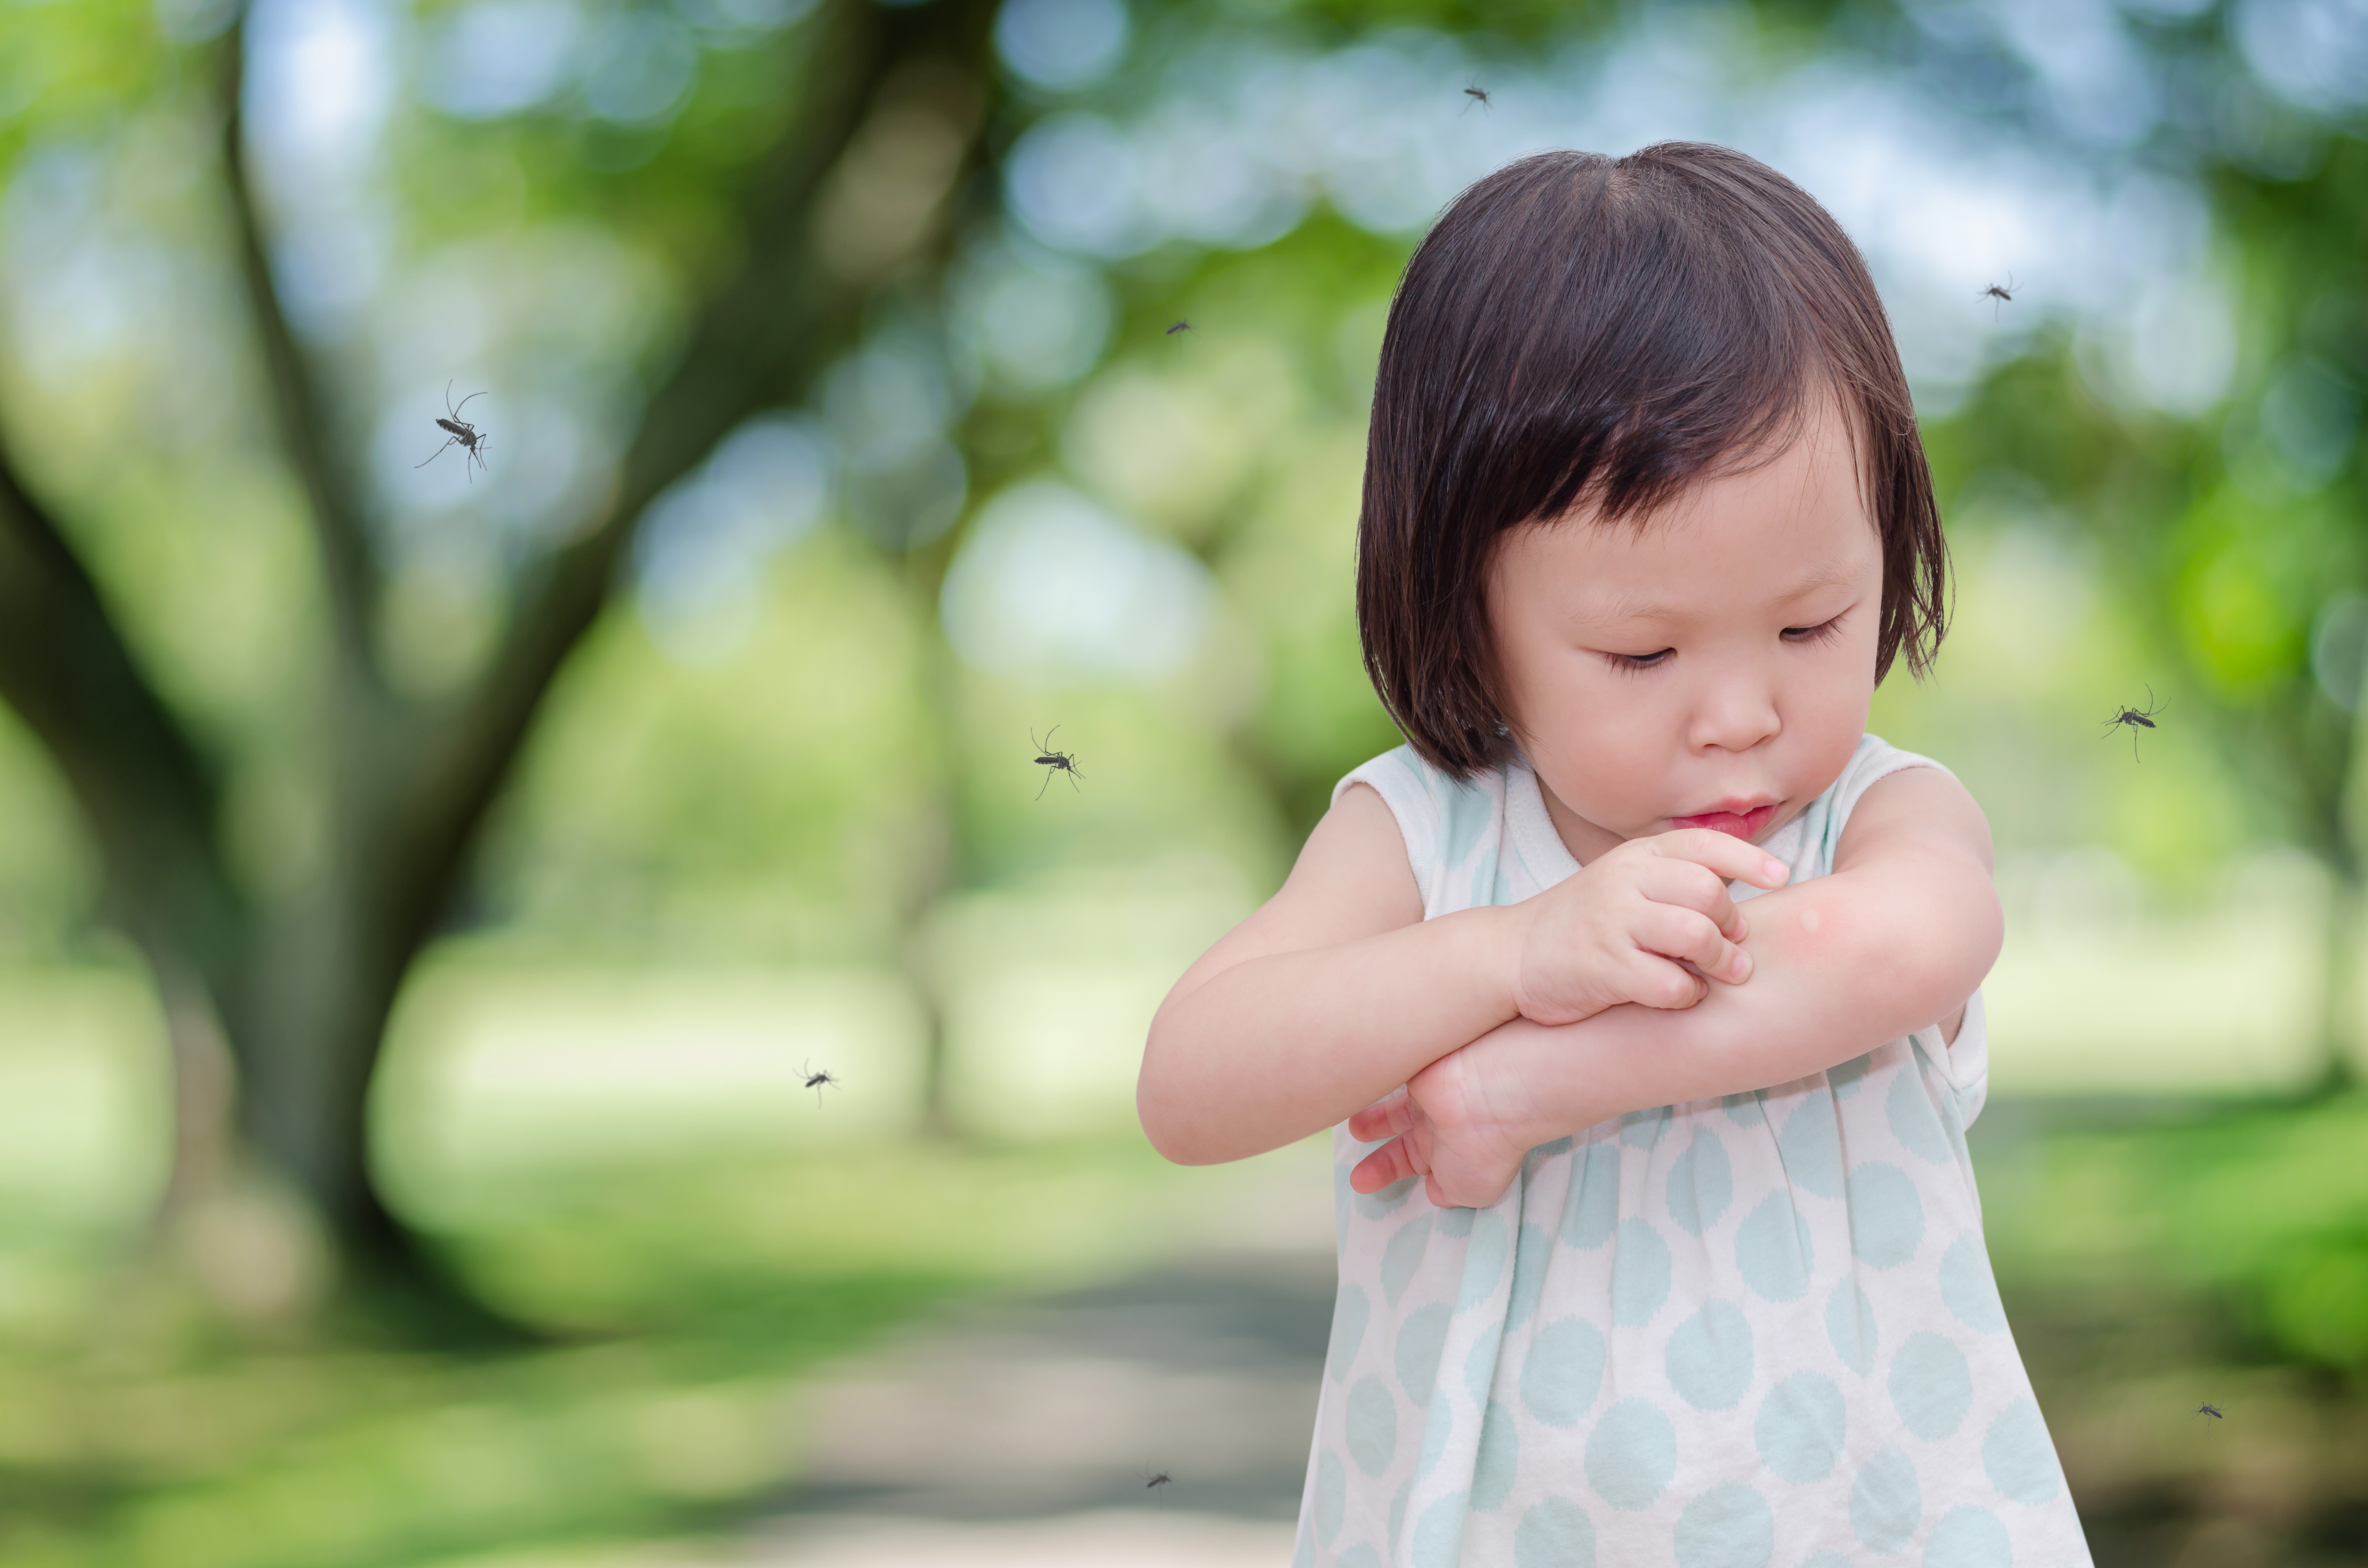 Child itching a mosquito bite in Georgia